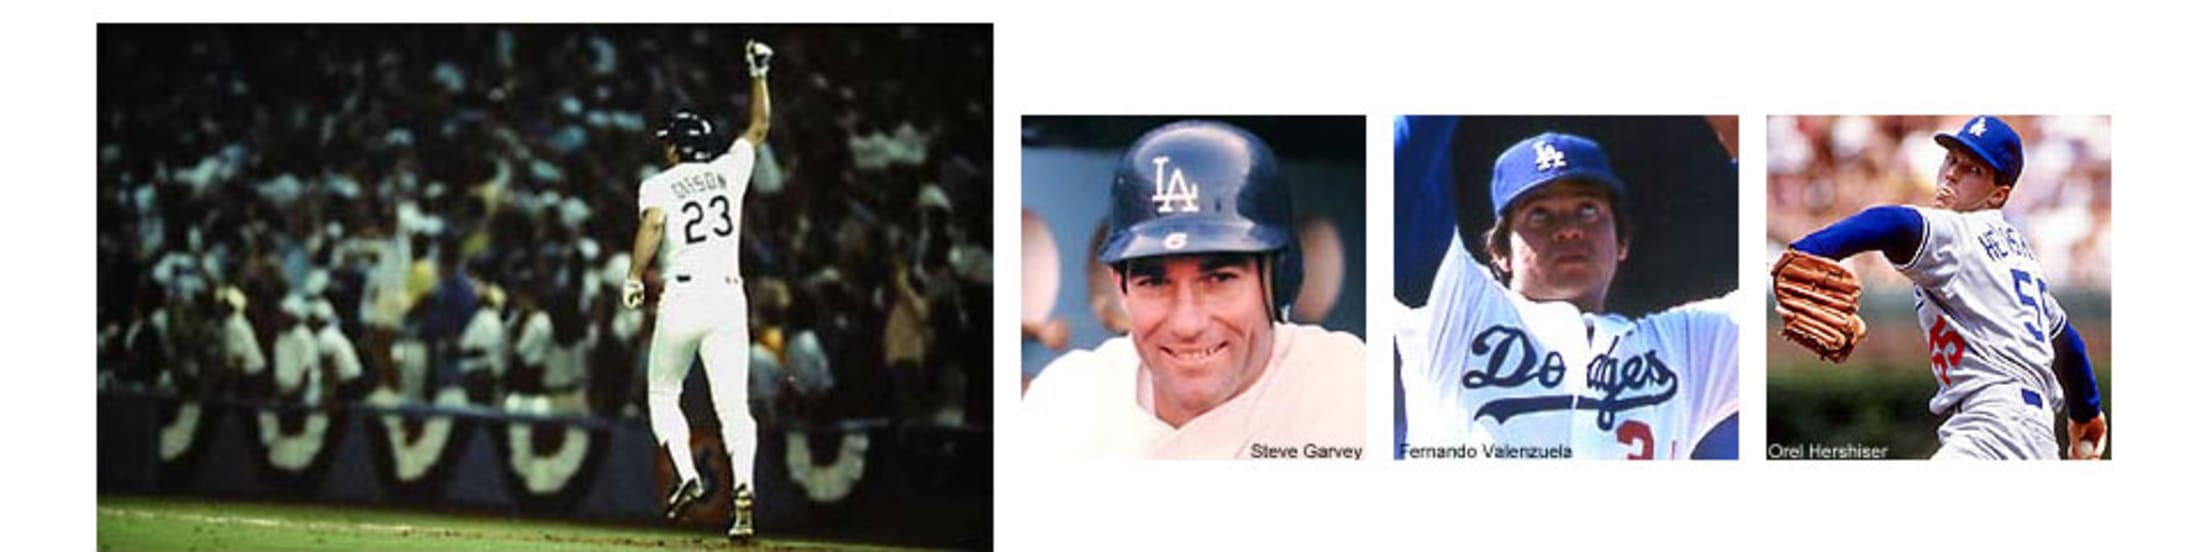 1988 Dodgers player profile: Fernando Valenzuela, the injured